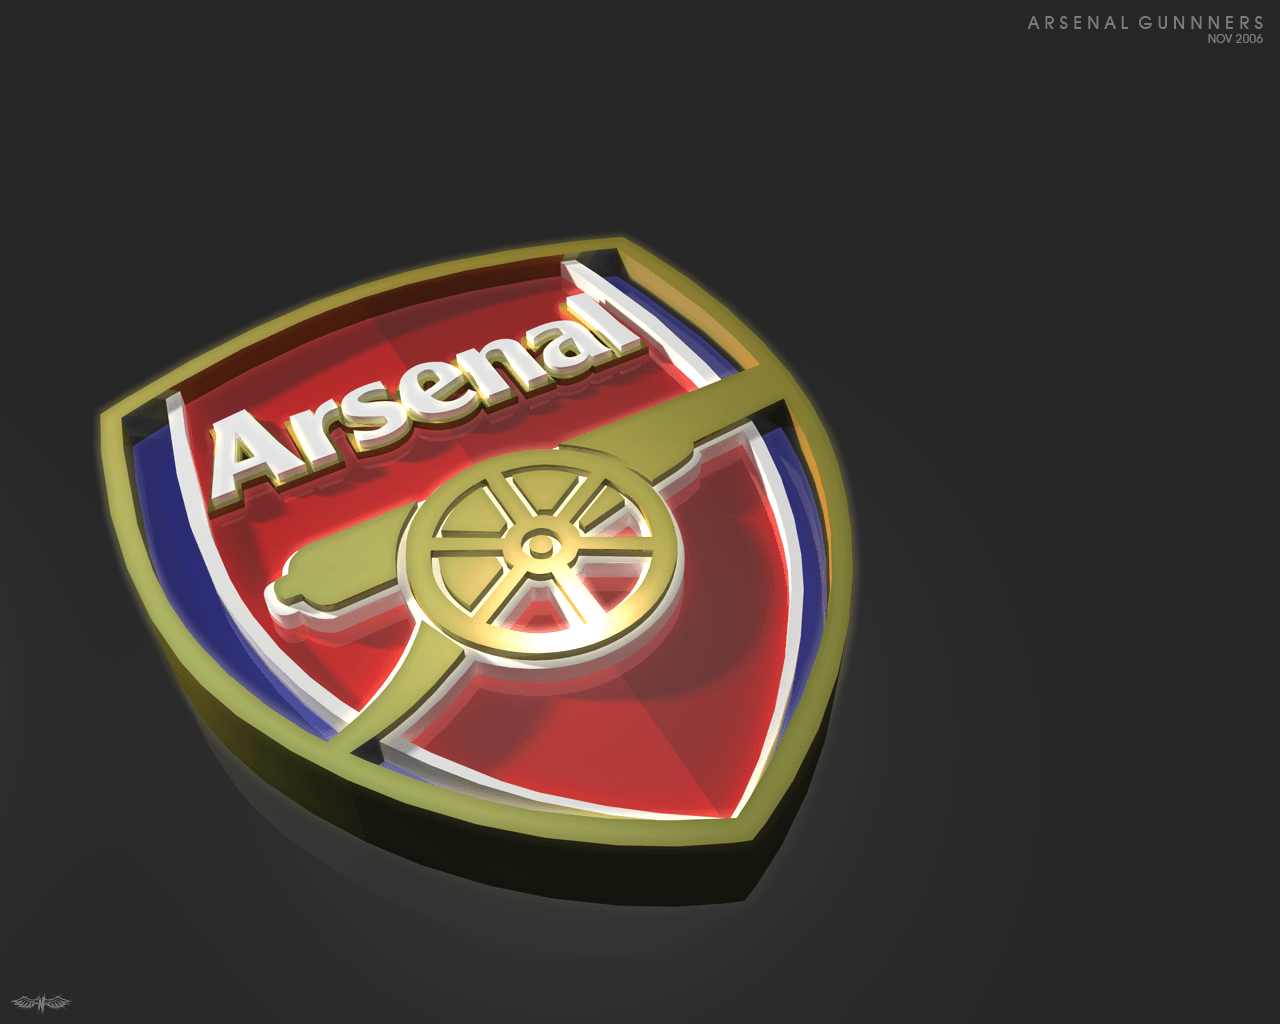 Arsenal logo wallpaper. Wallpaper Wide HD